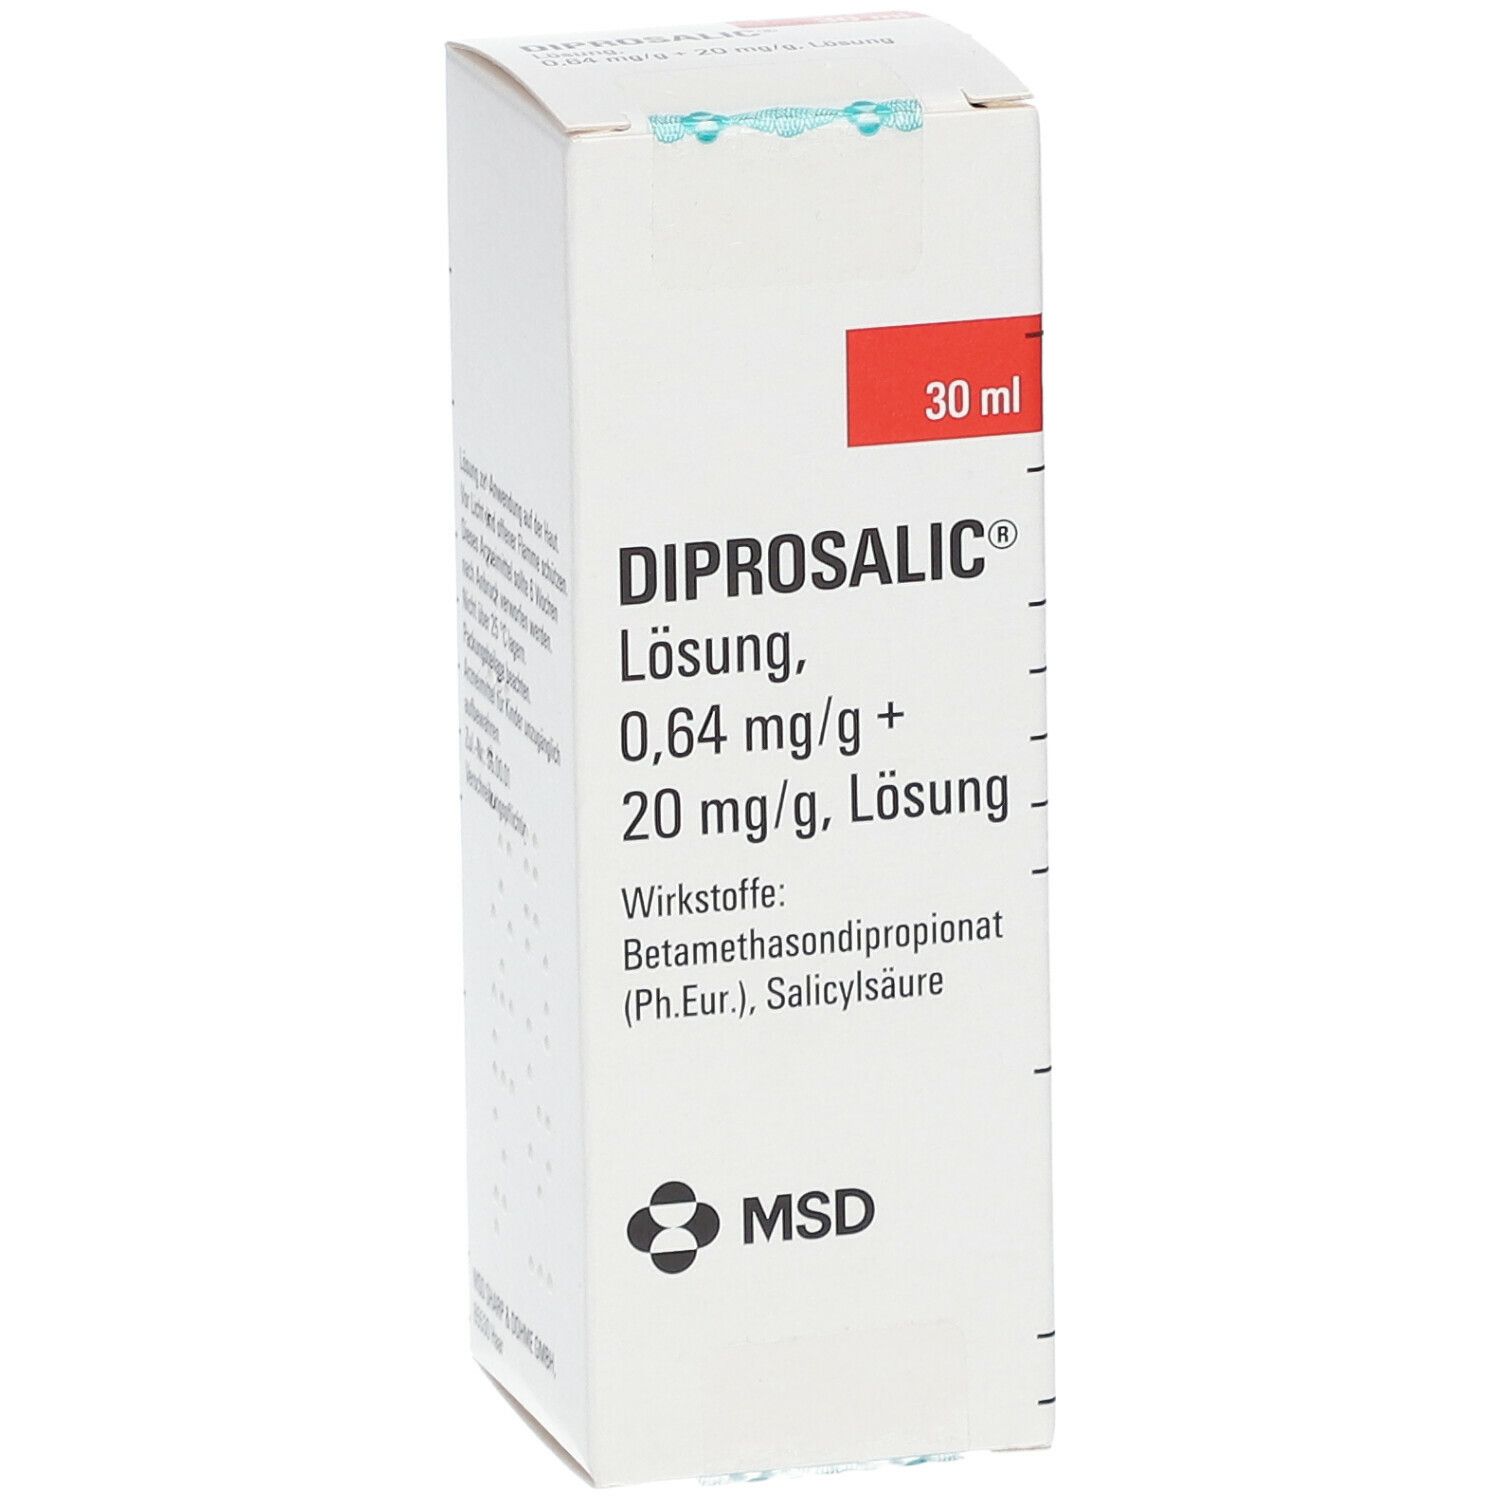 DIPROSALIC® 0,64 mg/g + 20 mg/g